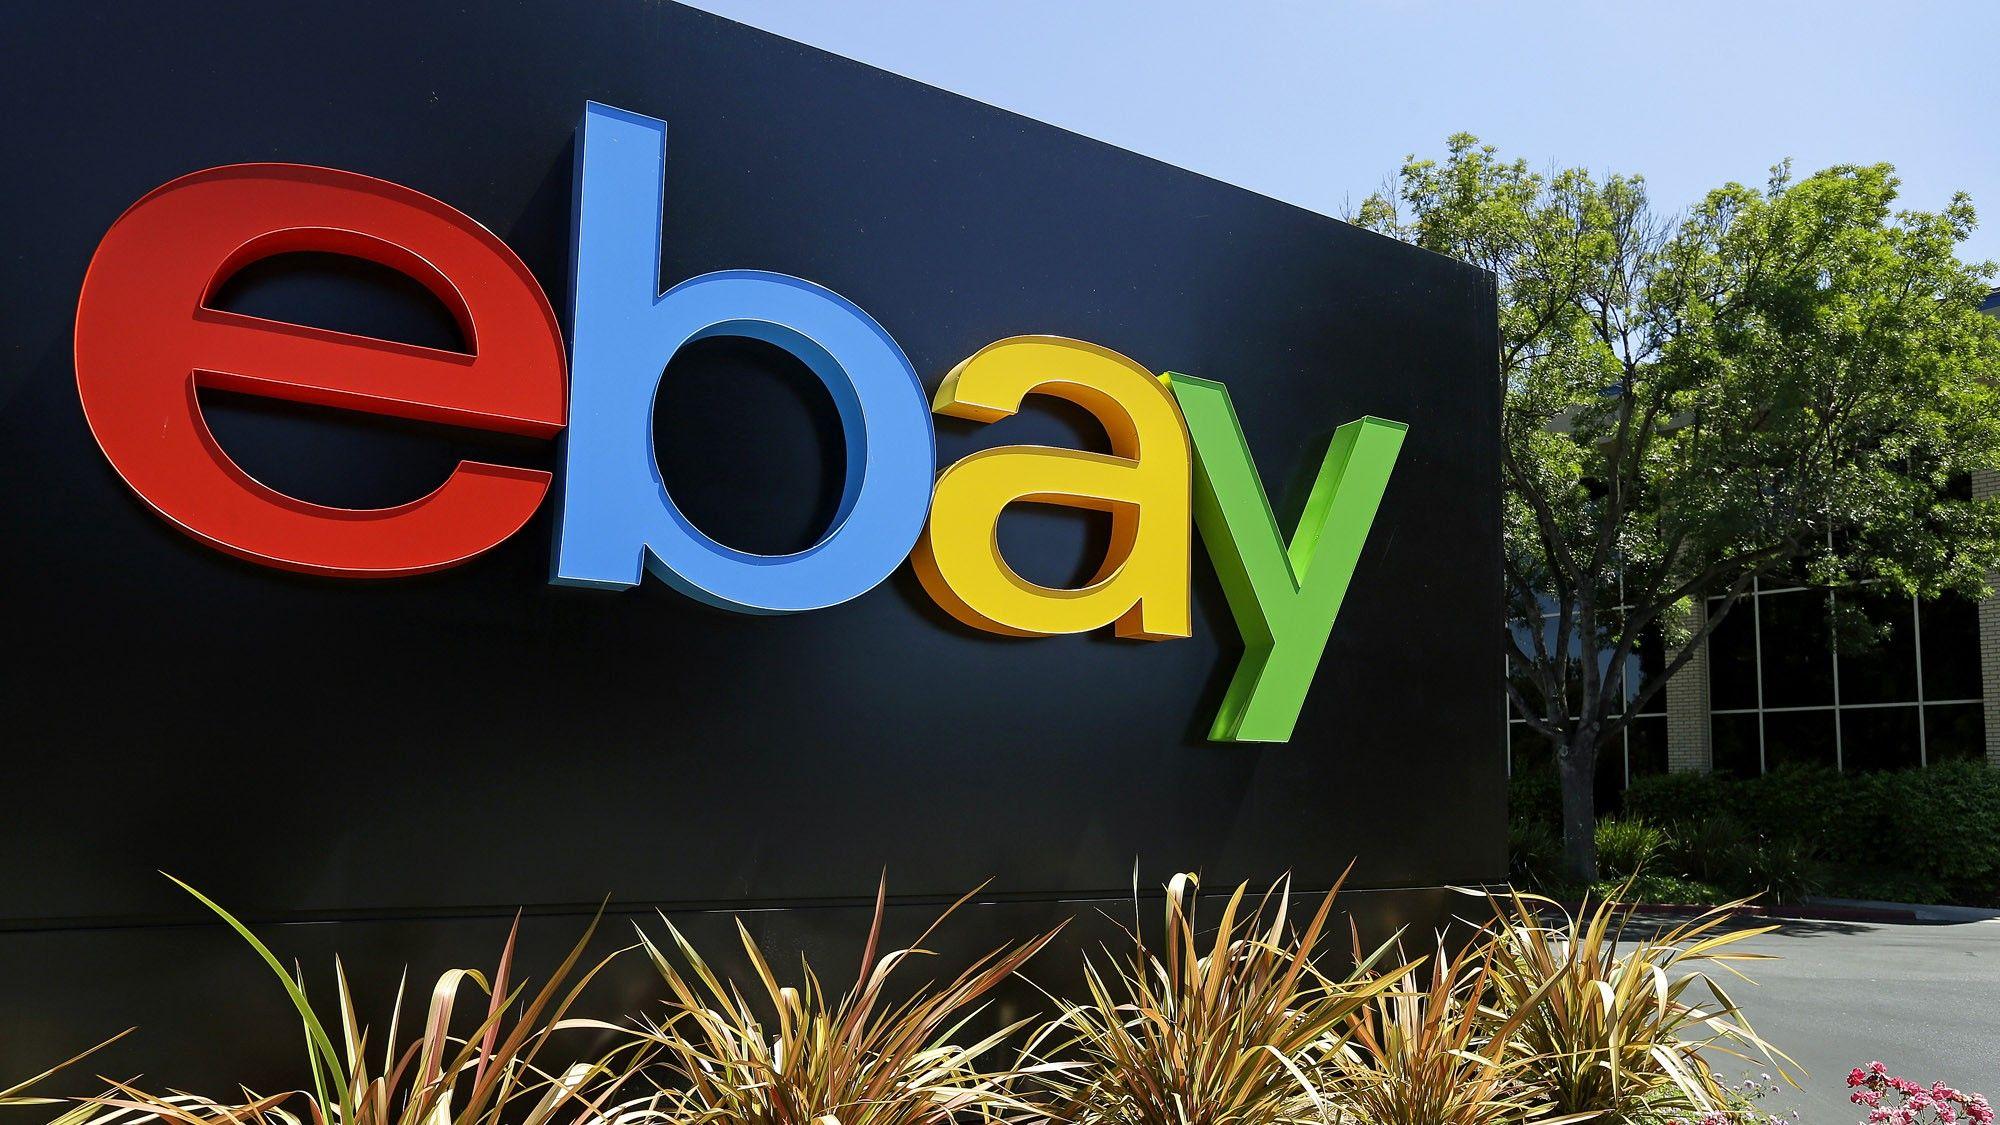 eBay Inc. Logo - eBay Inc Shares Tumble as Q4 Forecast Could Miss View (EBAY)